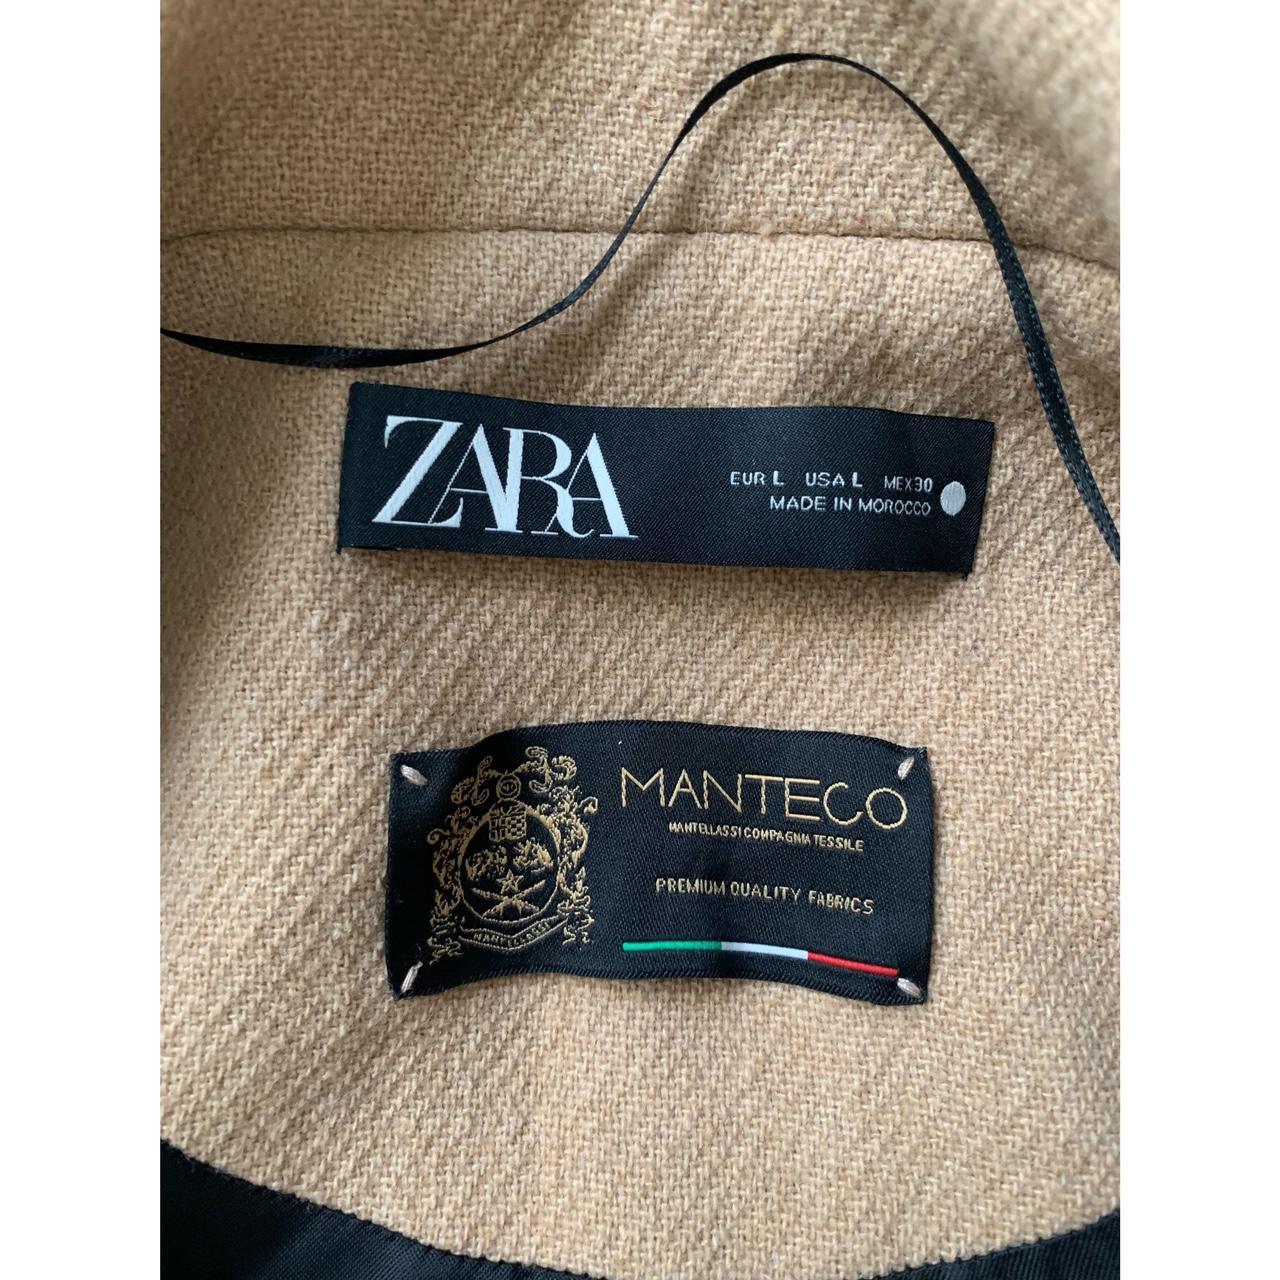 Zara camel wool Manteco coat Gorgeous coat, never... - Depop